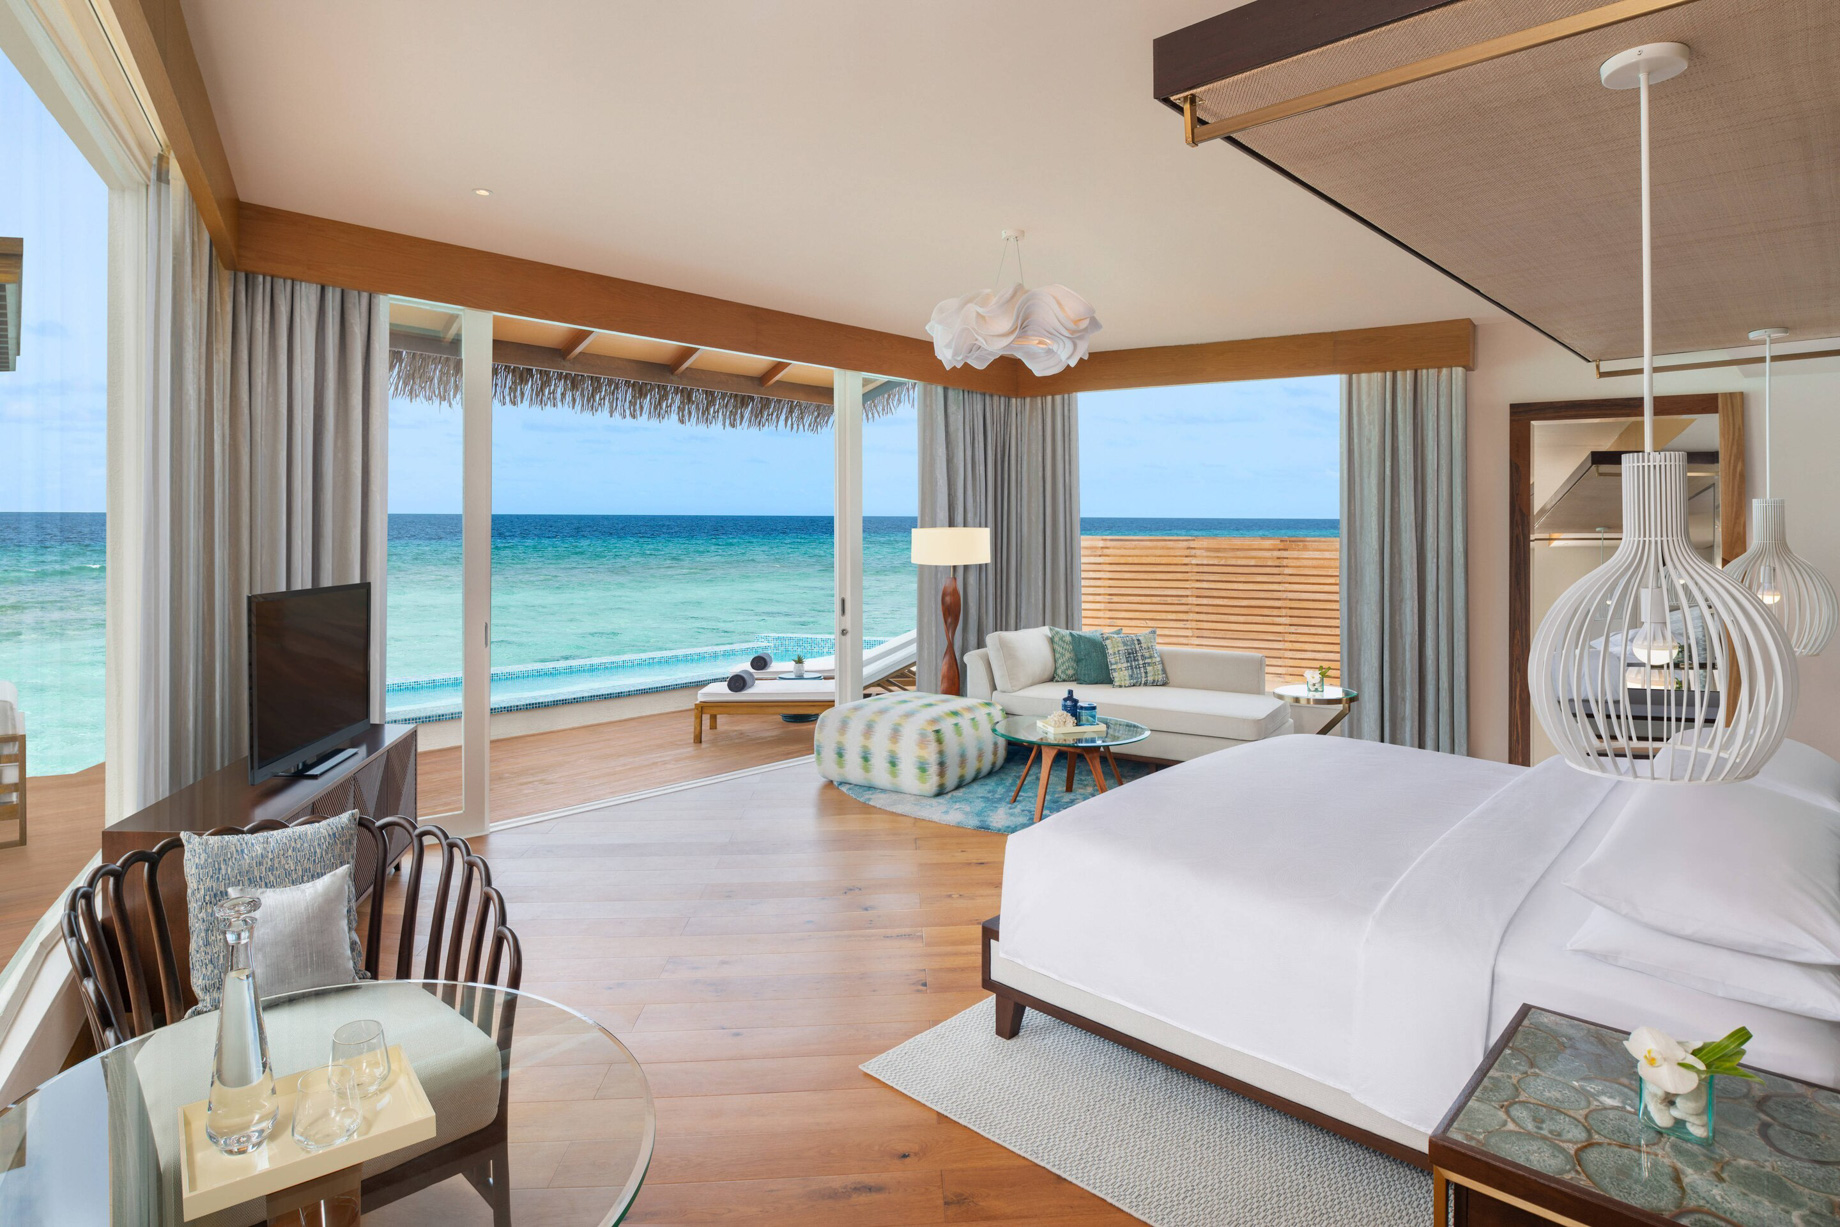 JW Marriott Maldives Resort & Spa - Shaviyani Atoll, Maldives - Duplex Overwater Pool Villa Bedroom Ocean View